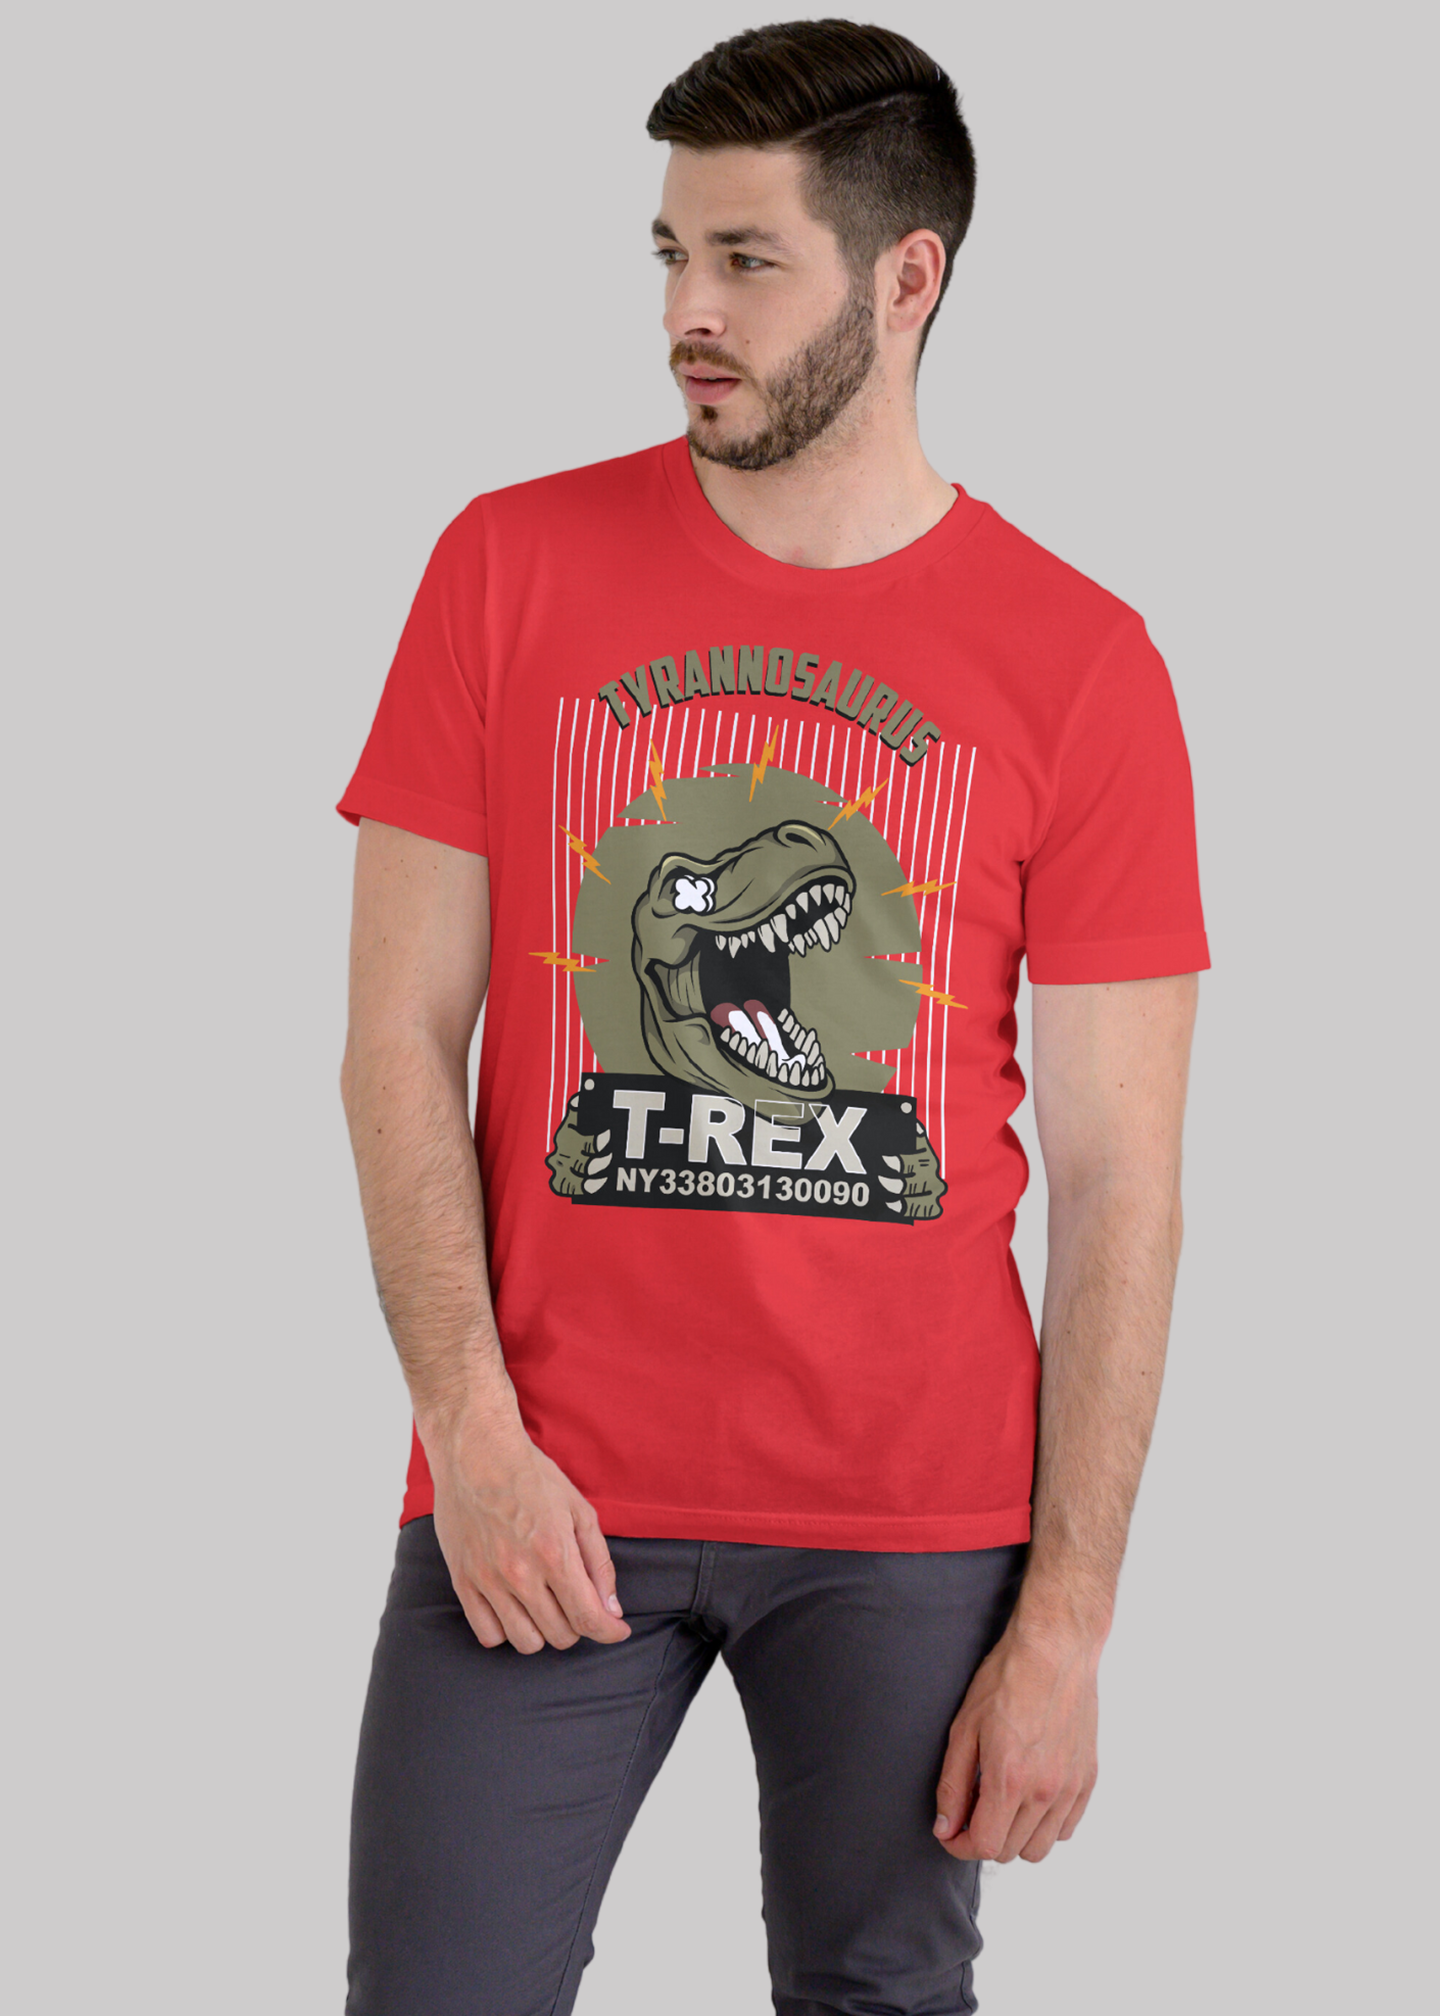 T rex Printed Half Sleeve Premium Cotton T-shirt For Men